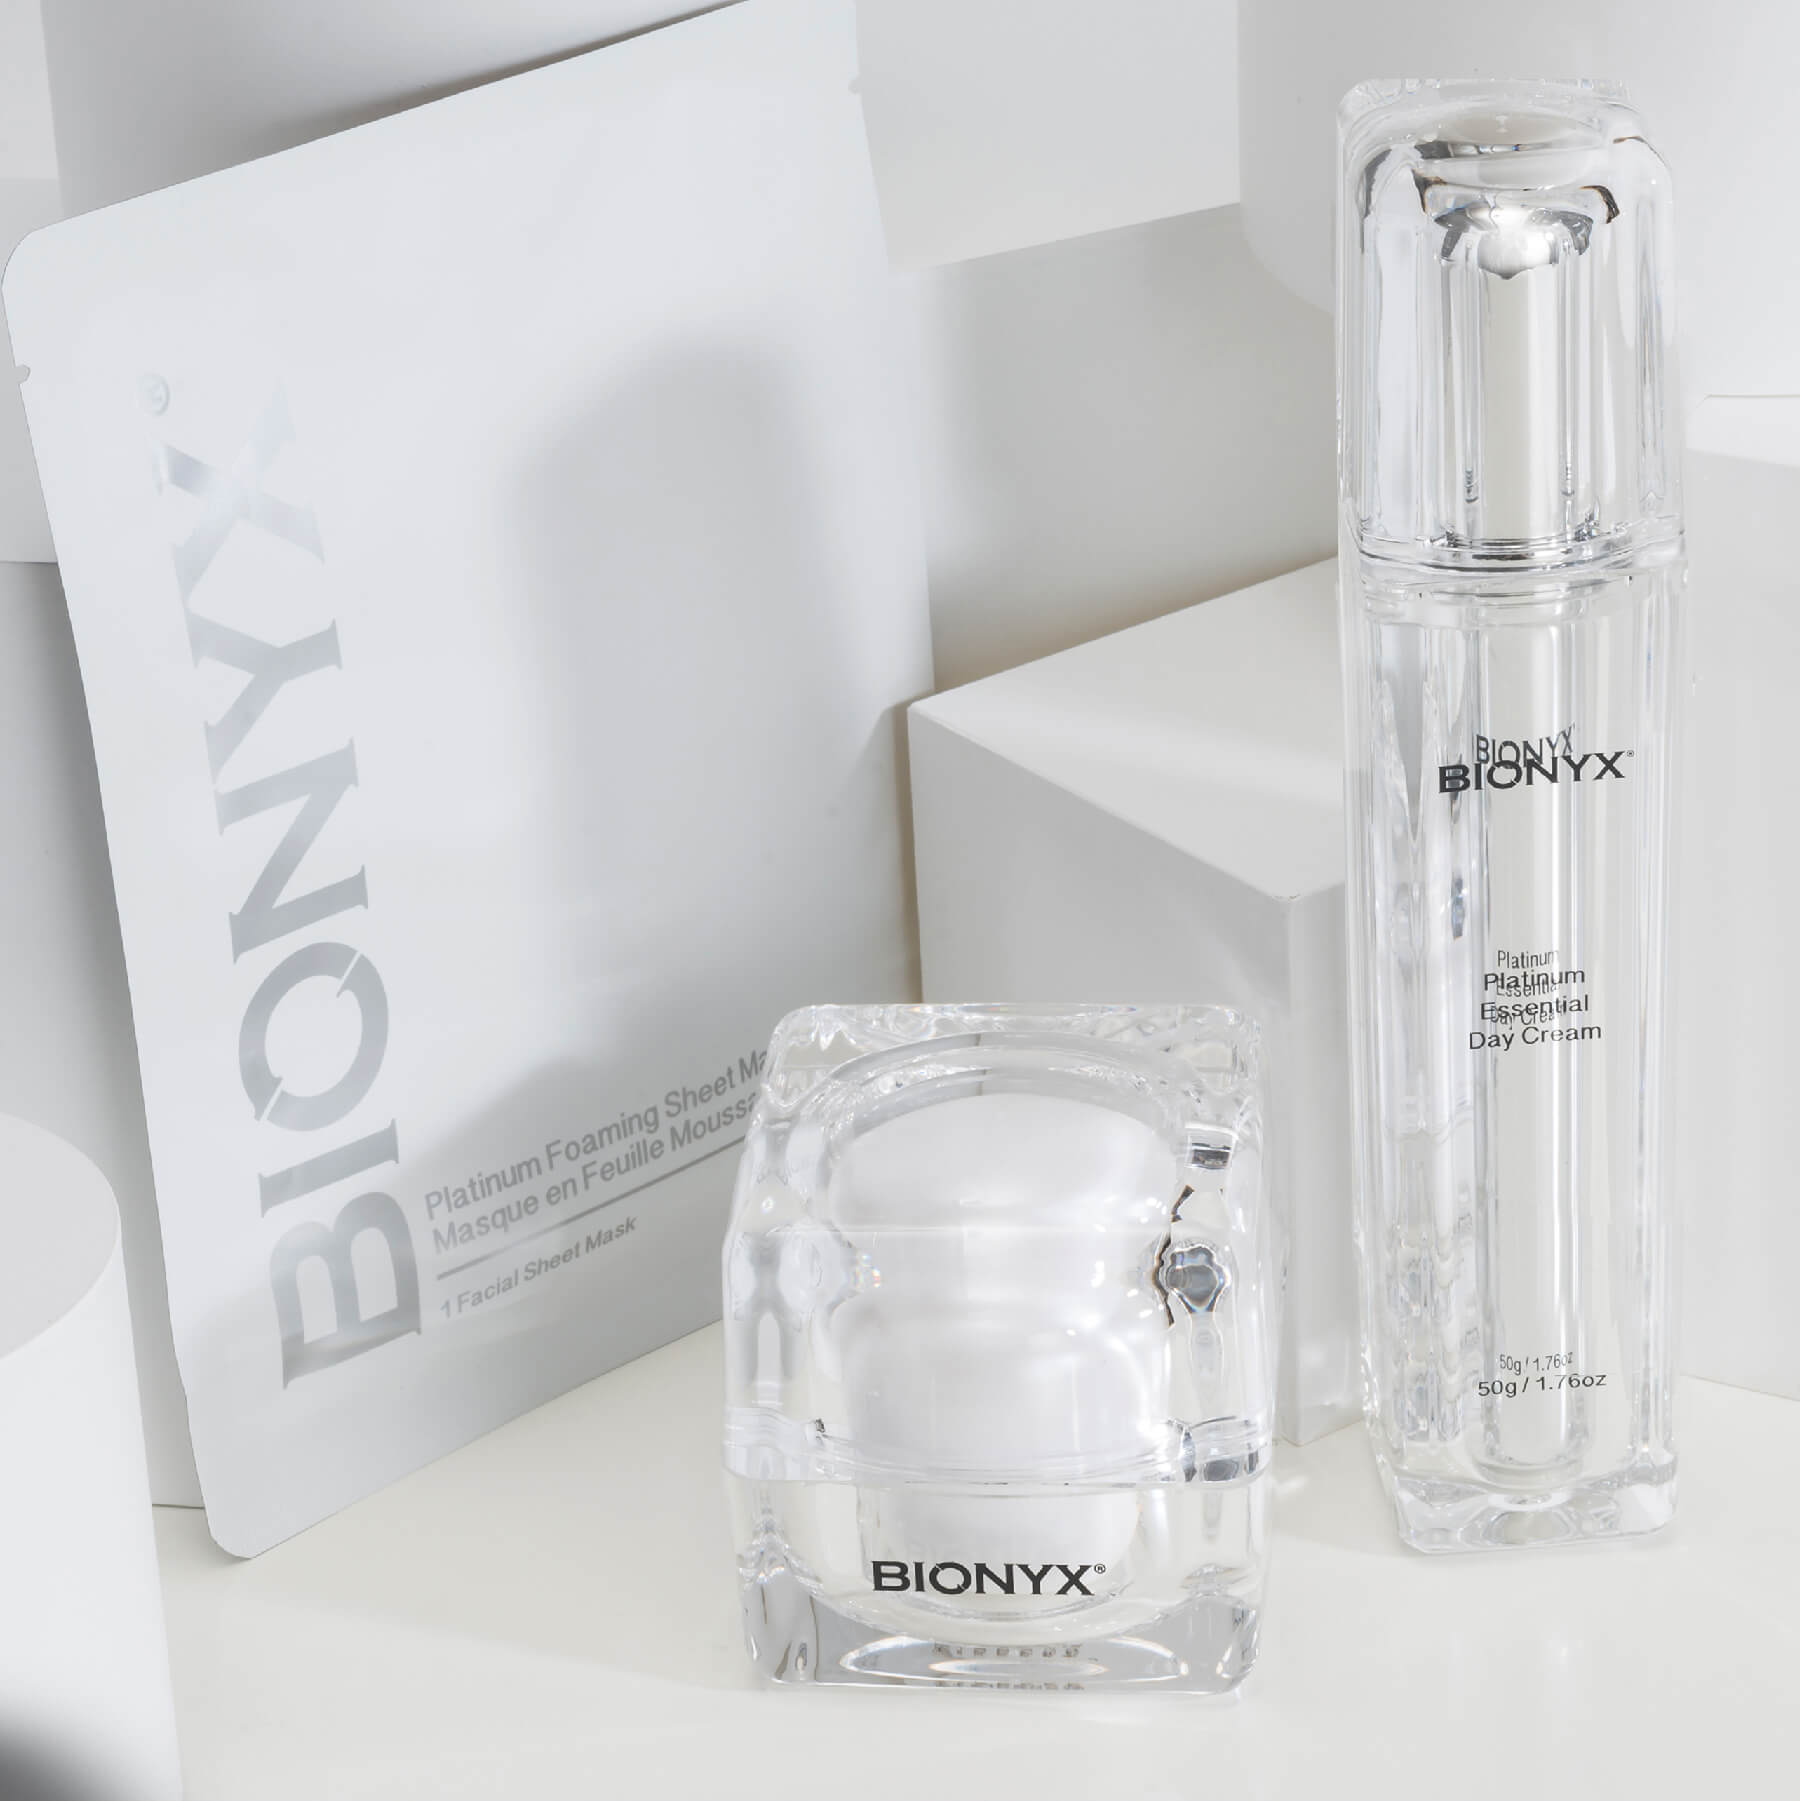 Bionyx products